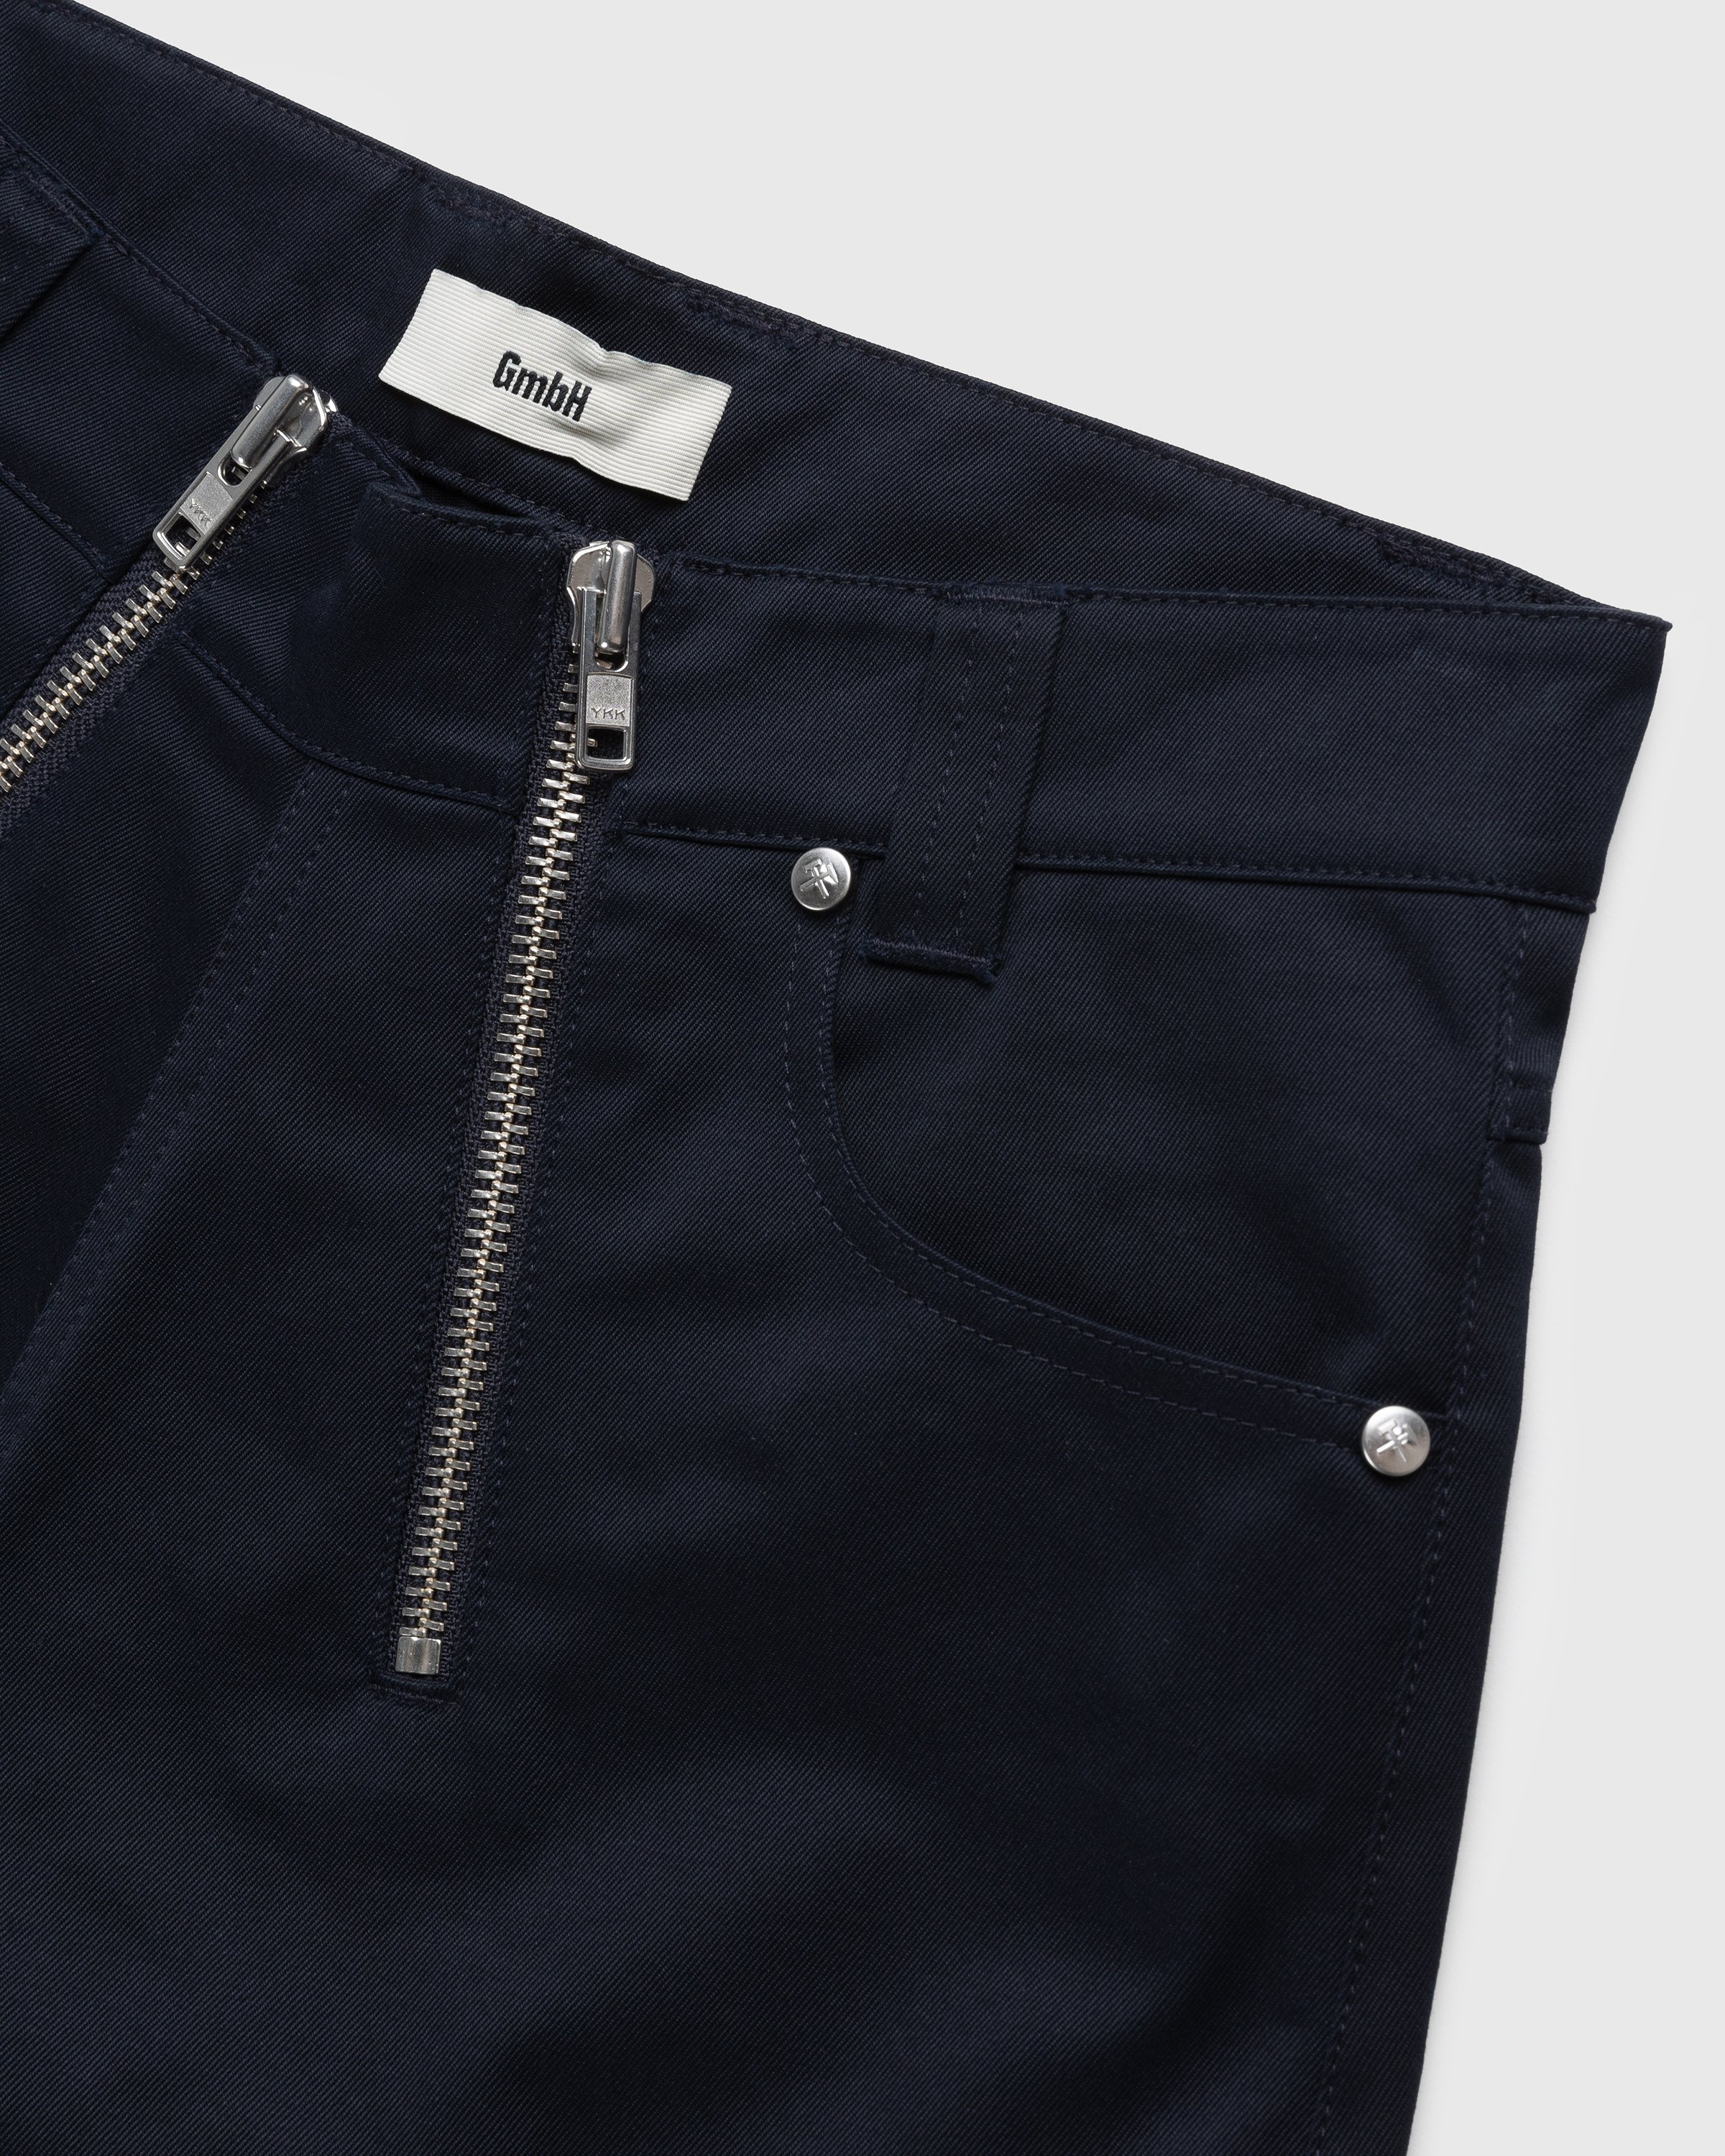 GmbH - Amir Double Zip Shorts Navy - Clothing - Blue - Image 5